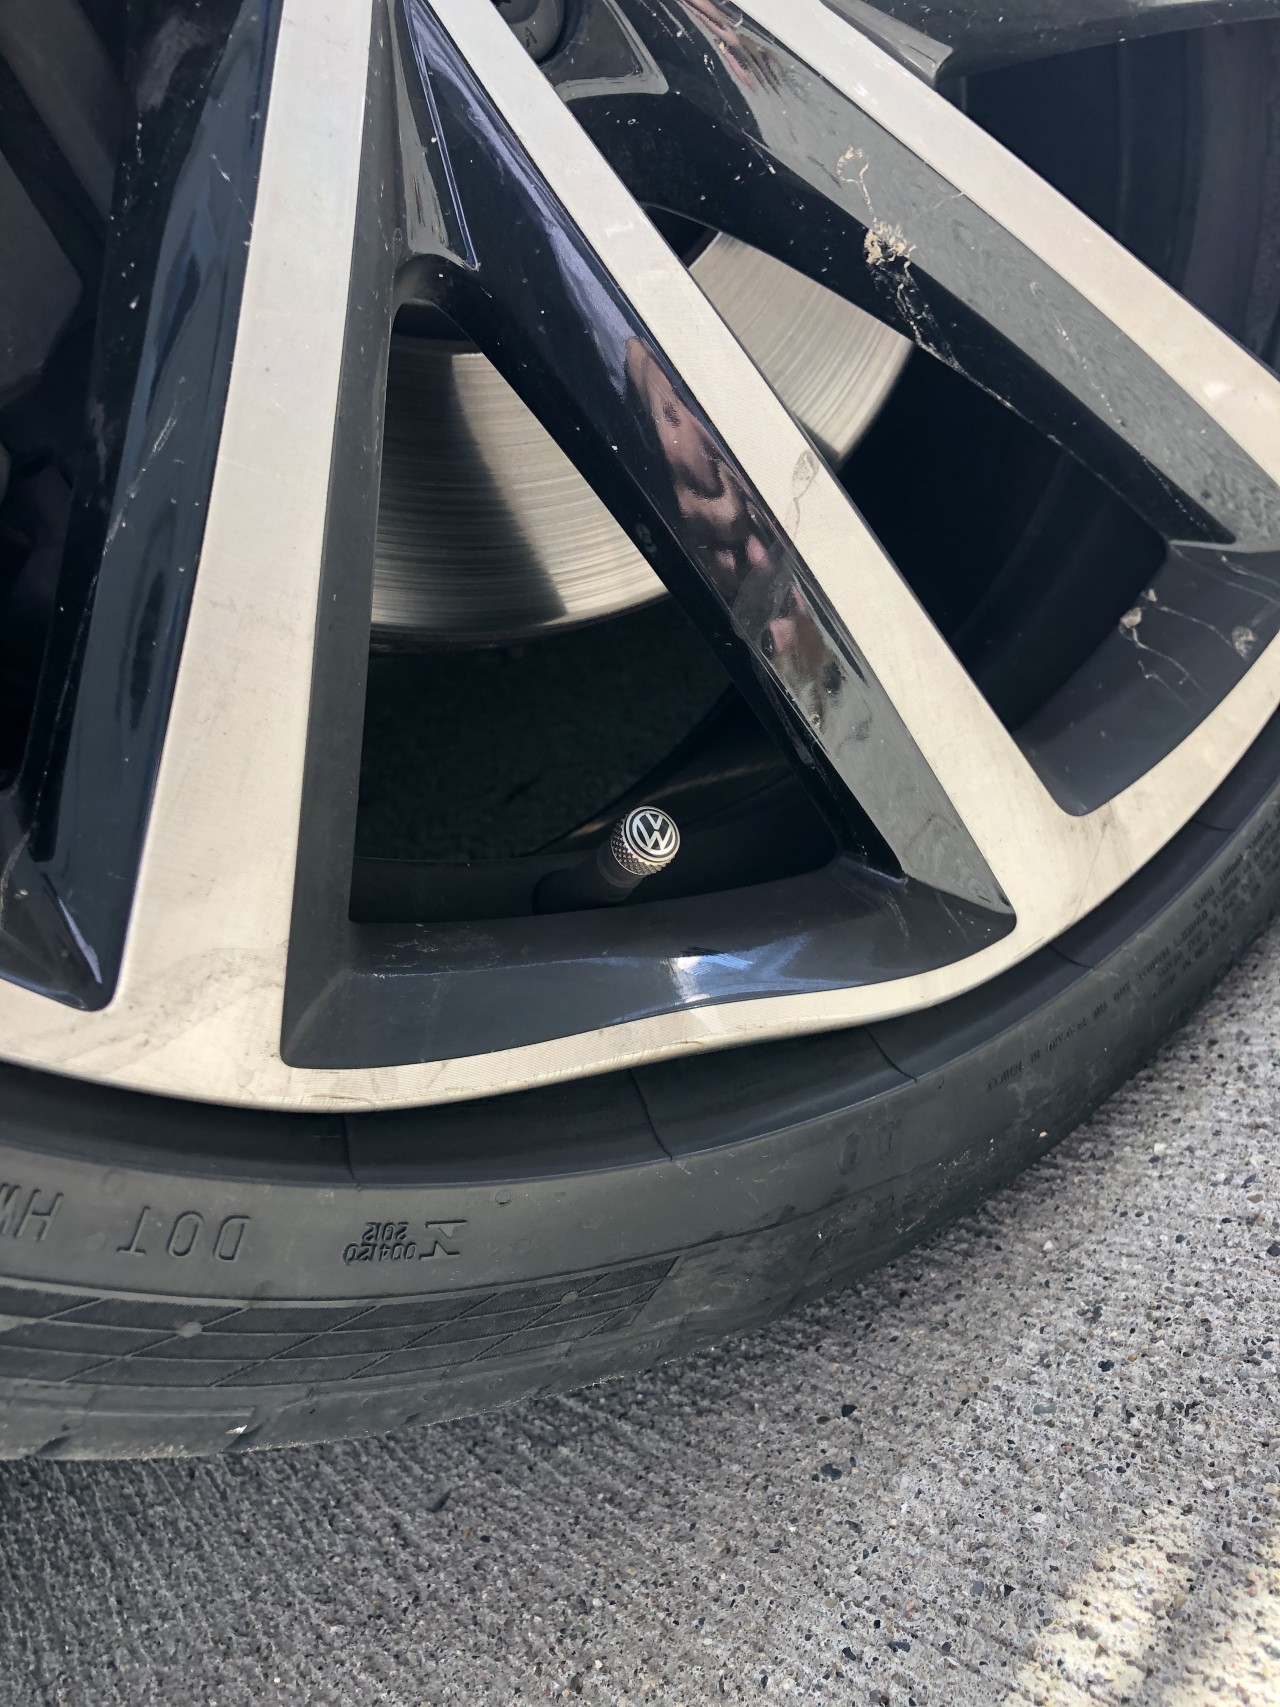 2019 VW Golf R bent wheel